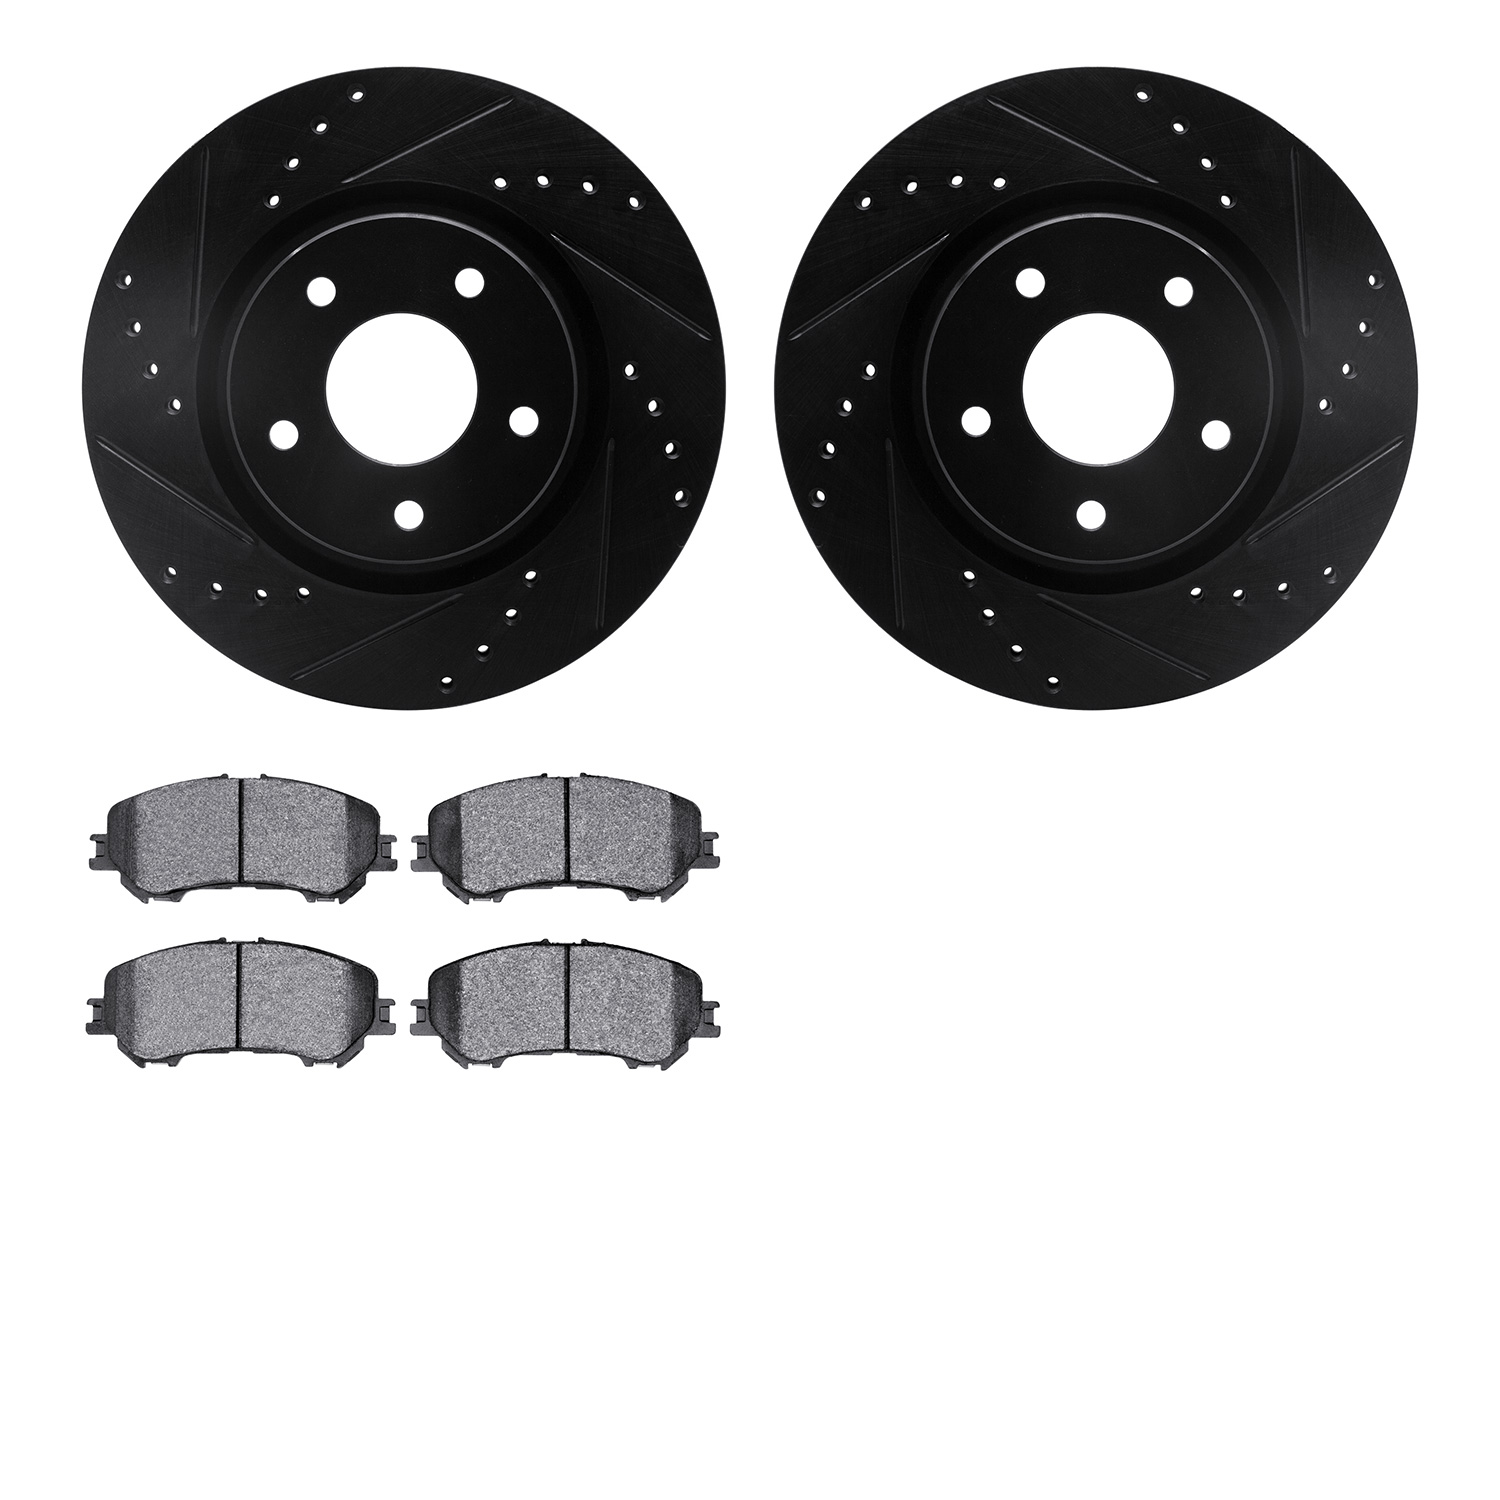 8302-67130 Drilled/Slotted Brake Rotors with 3000-Series Ceramic Brake Pads Kit [Black], Fits Select Multiple Makes/Models, Posi